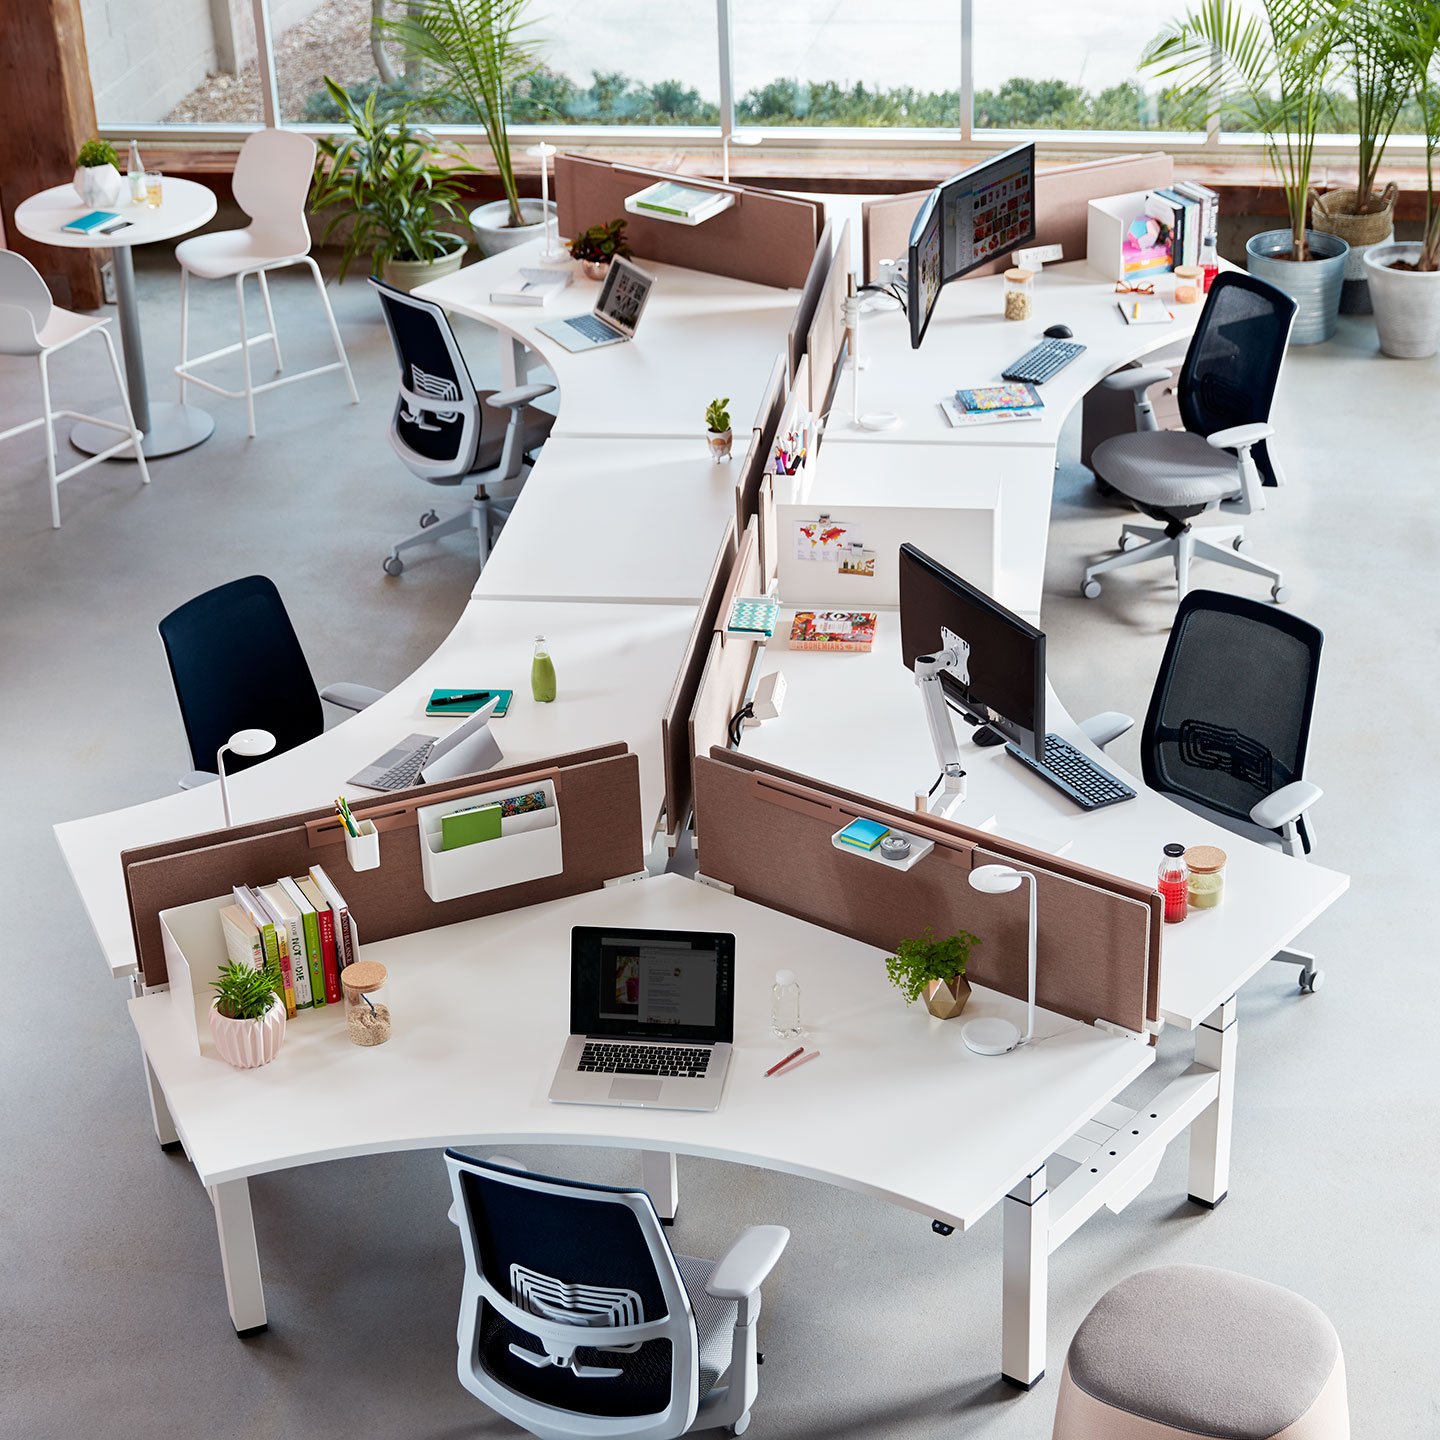 Haworth Belong Sceen in etch brown on multiple desks in open office area